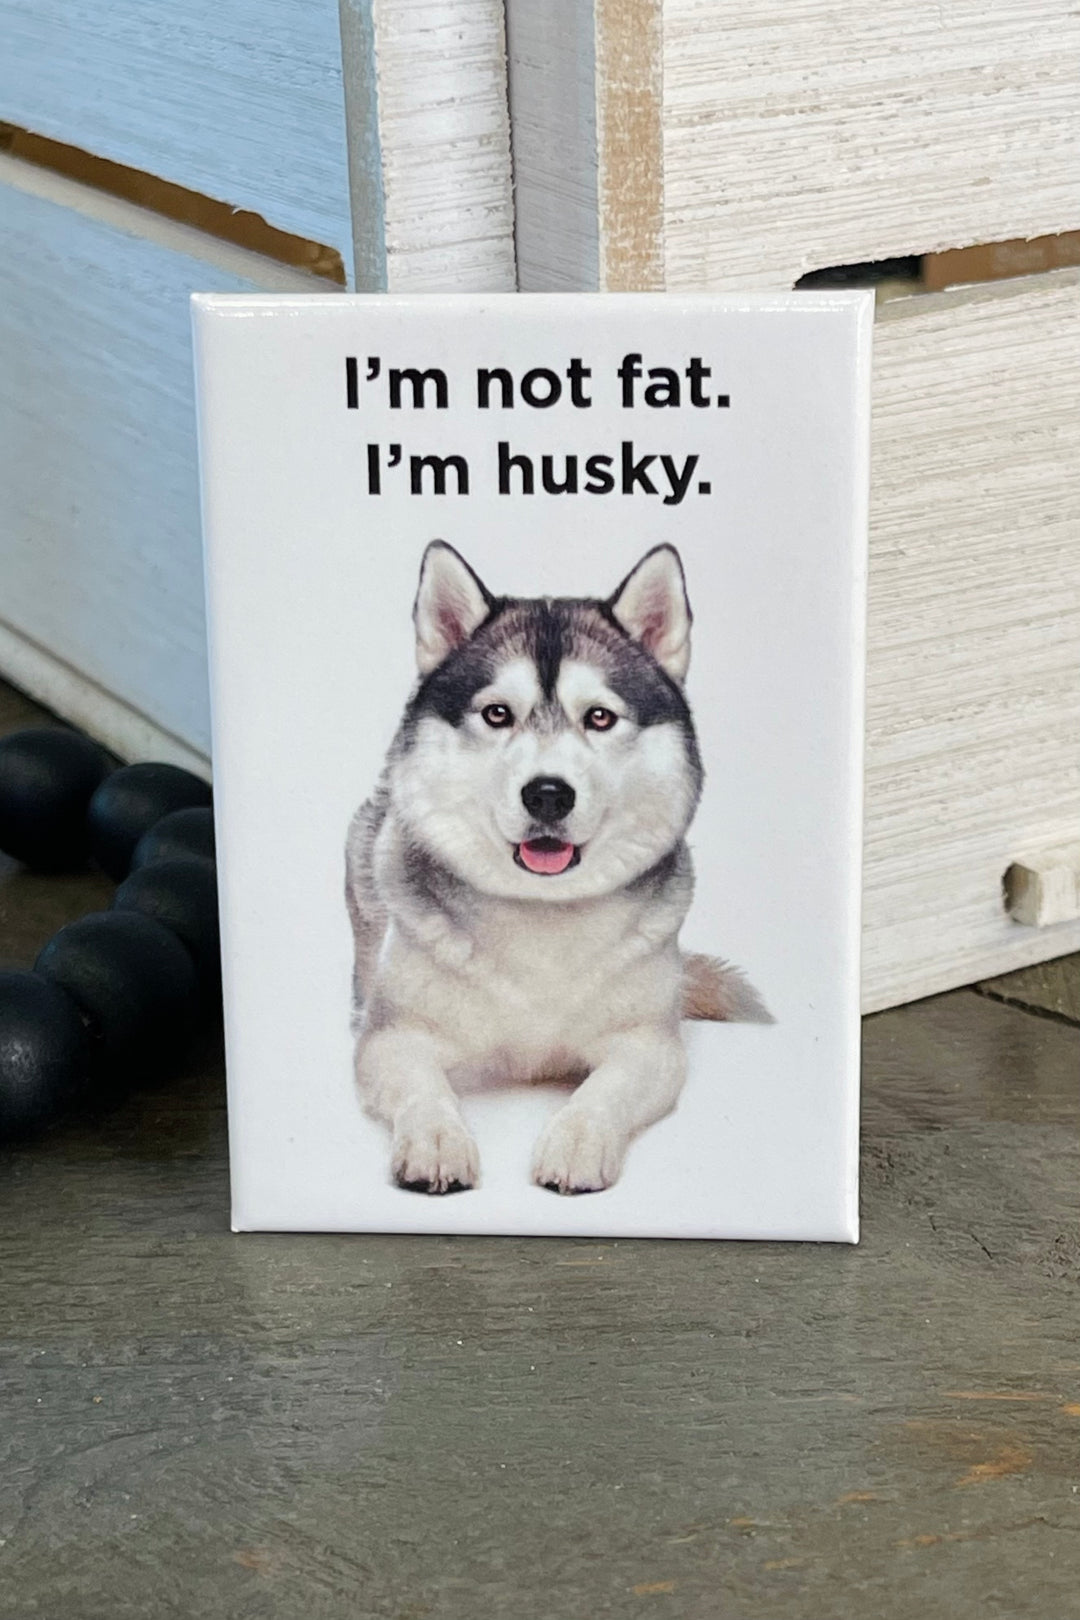 MAGNET: I'm not fat. I'm husky.